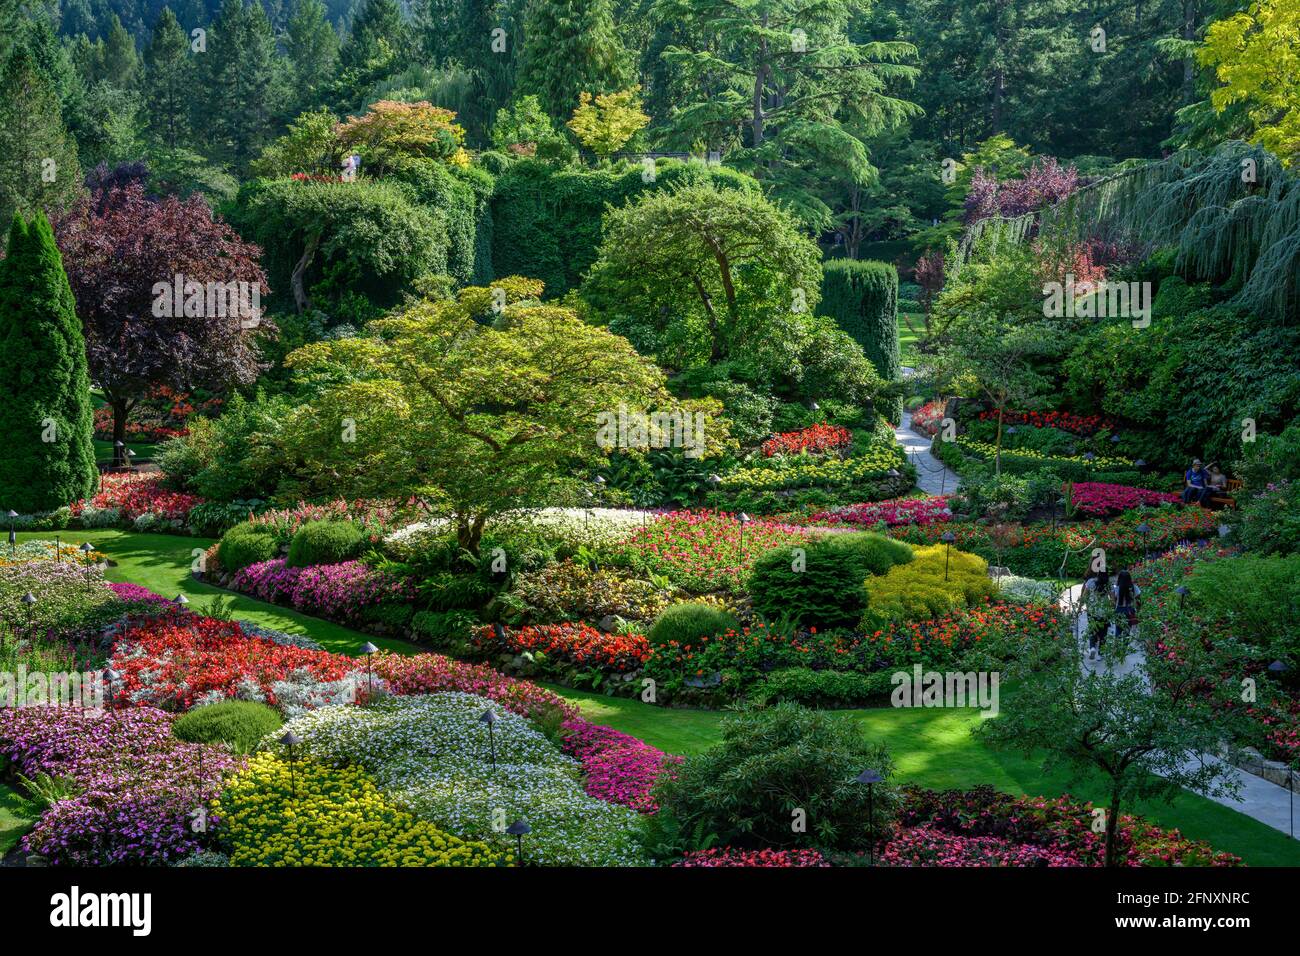 Die berühmten Butchart Gardens auf Vancouver Island in British Columbia, Kanada. Stockfoto